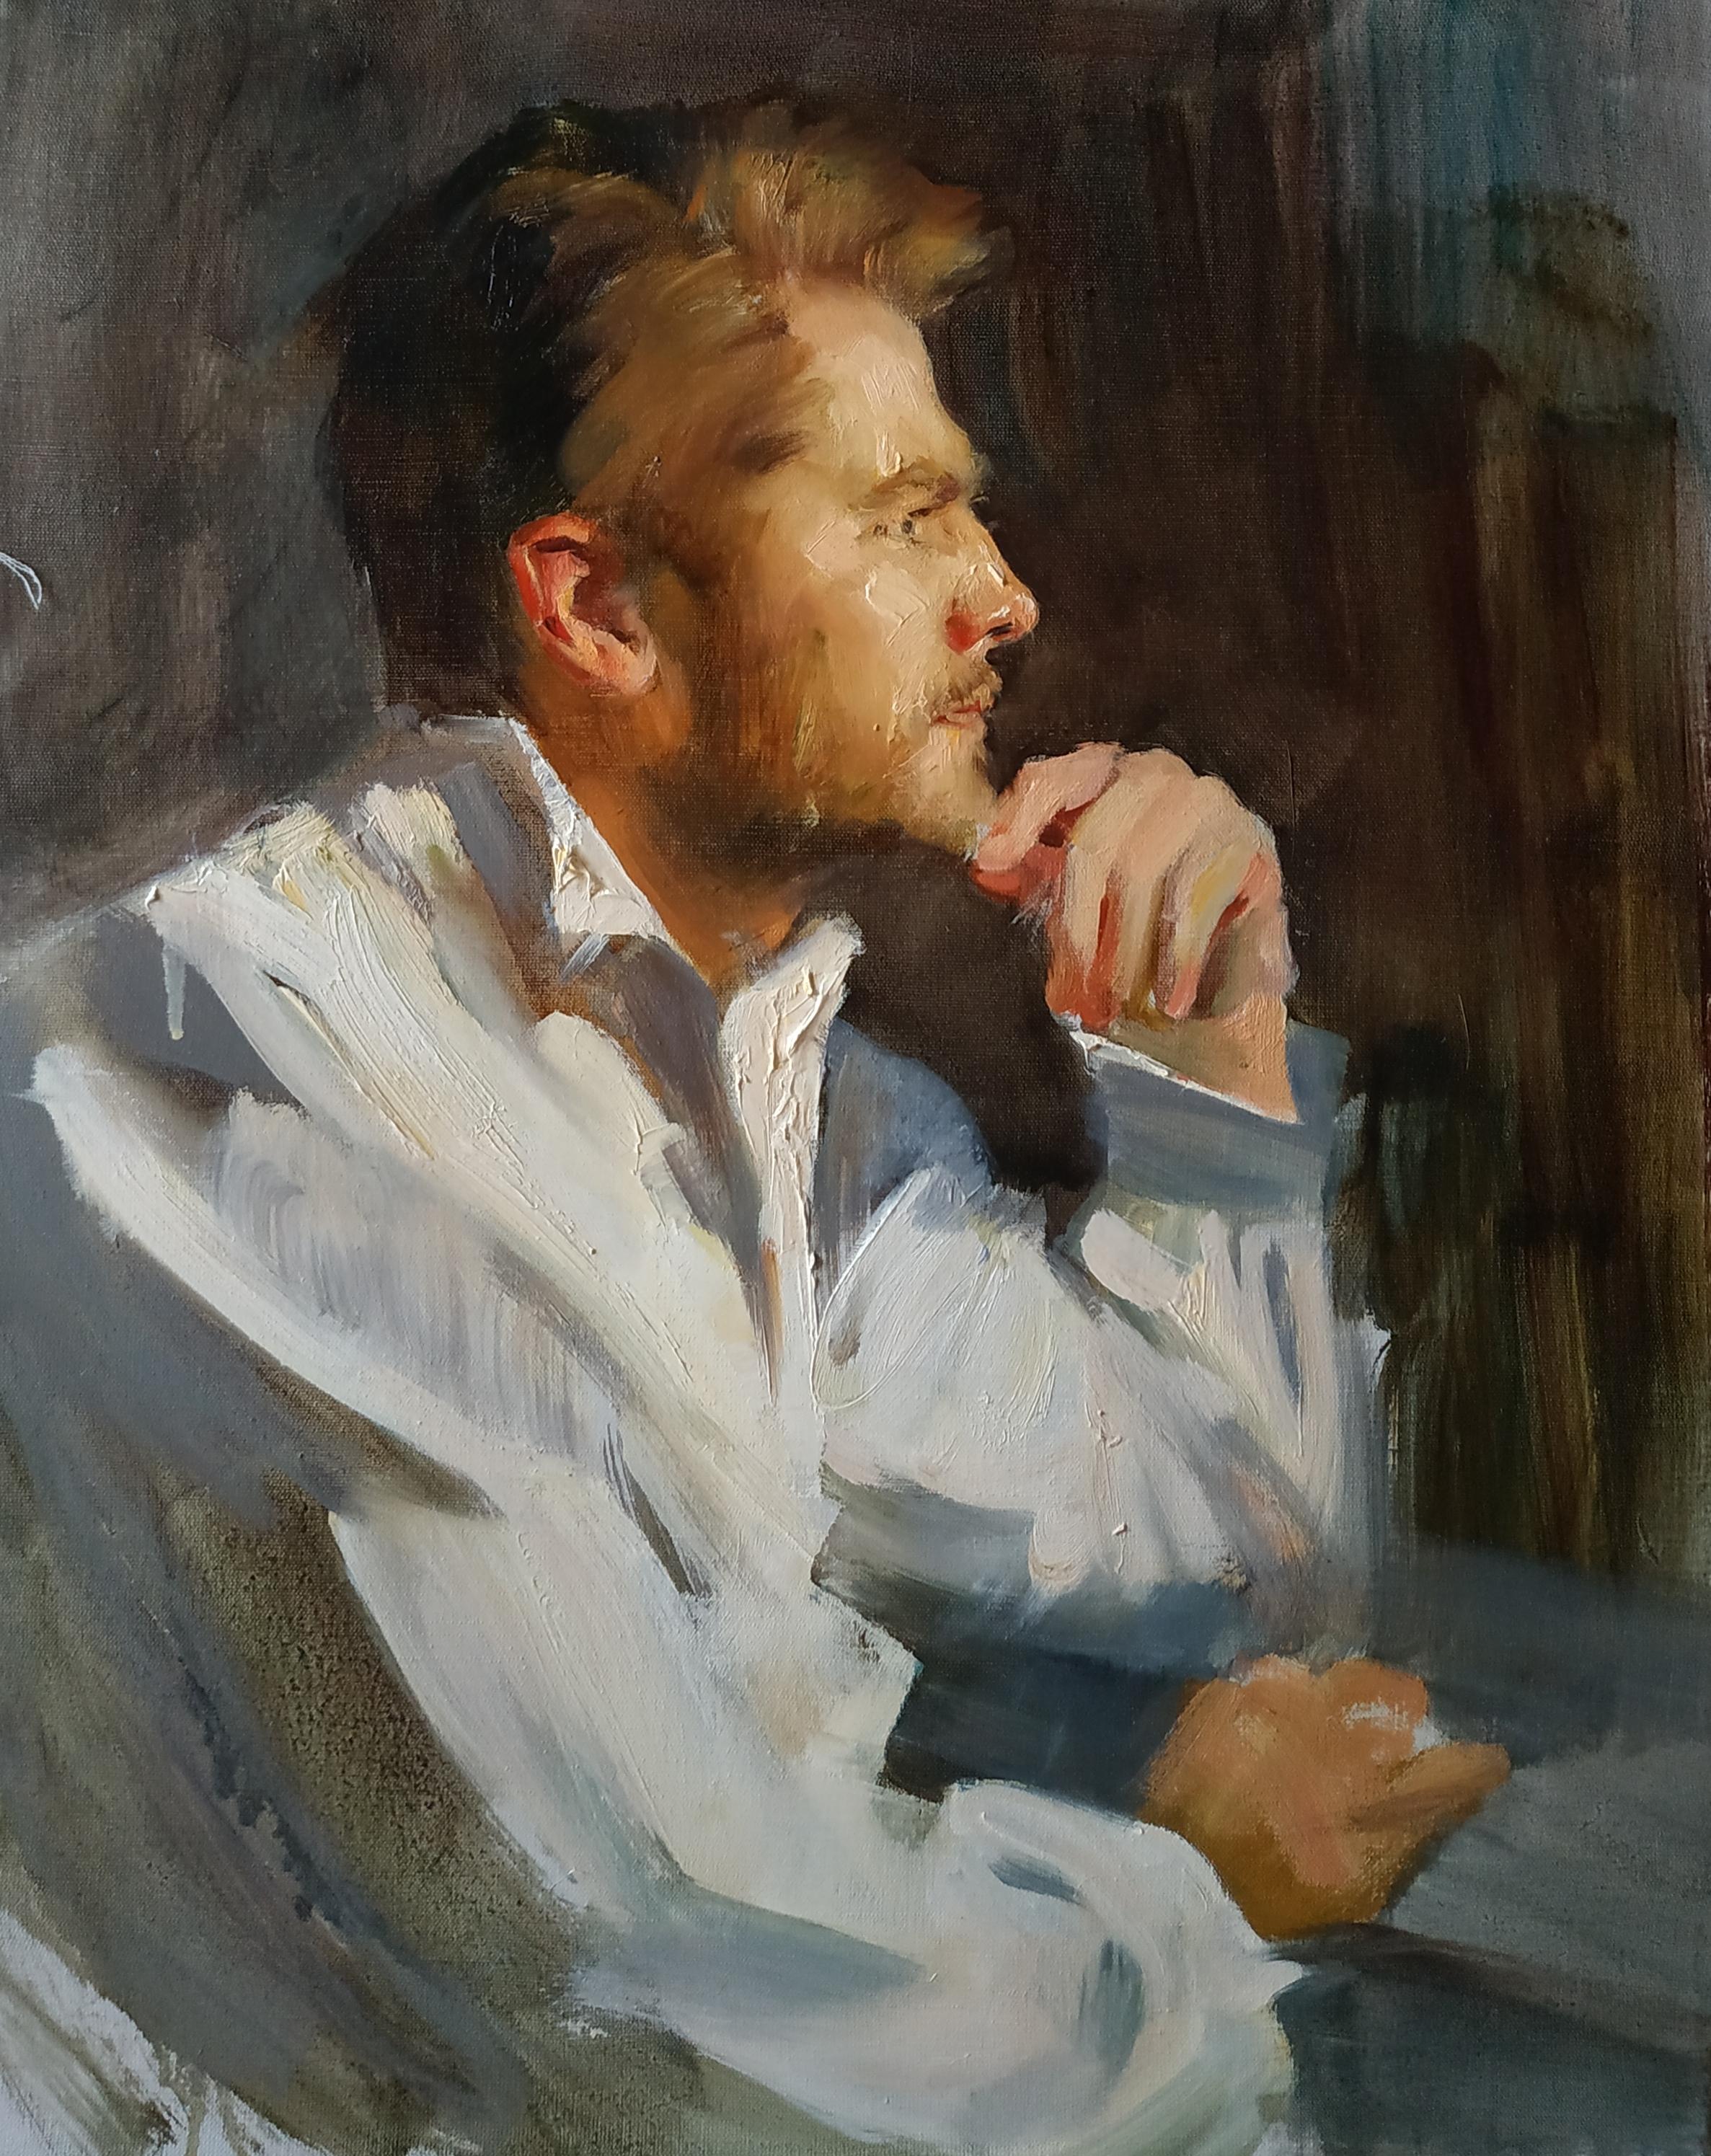 Ekaterina Bryleva Figurative Painting - The Thinker - 21st Century Contemporary Romantic Male Portrait Oil Painting